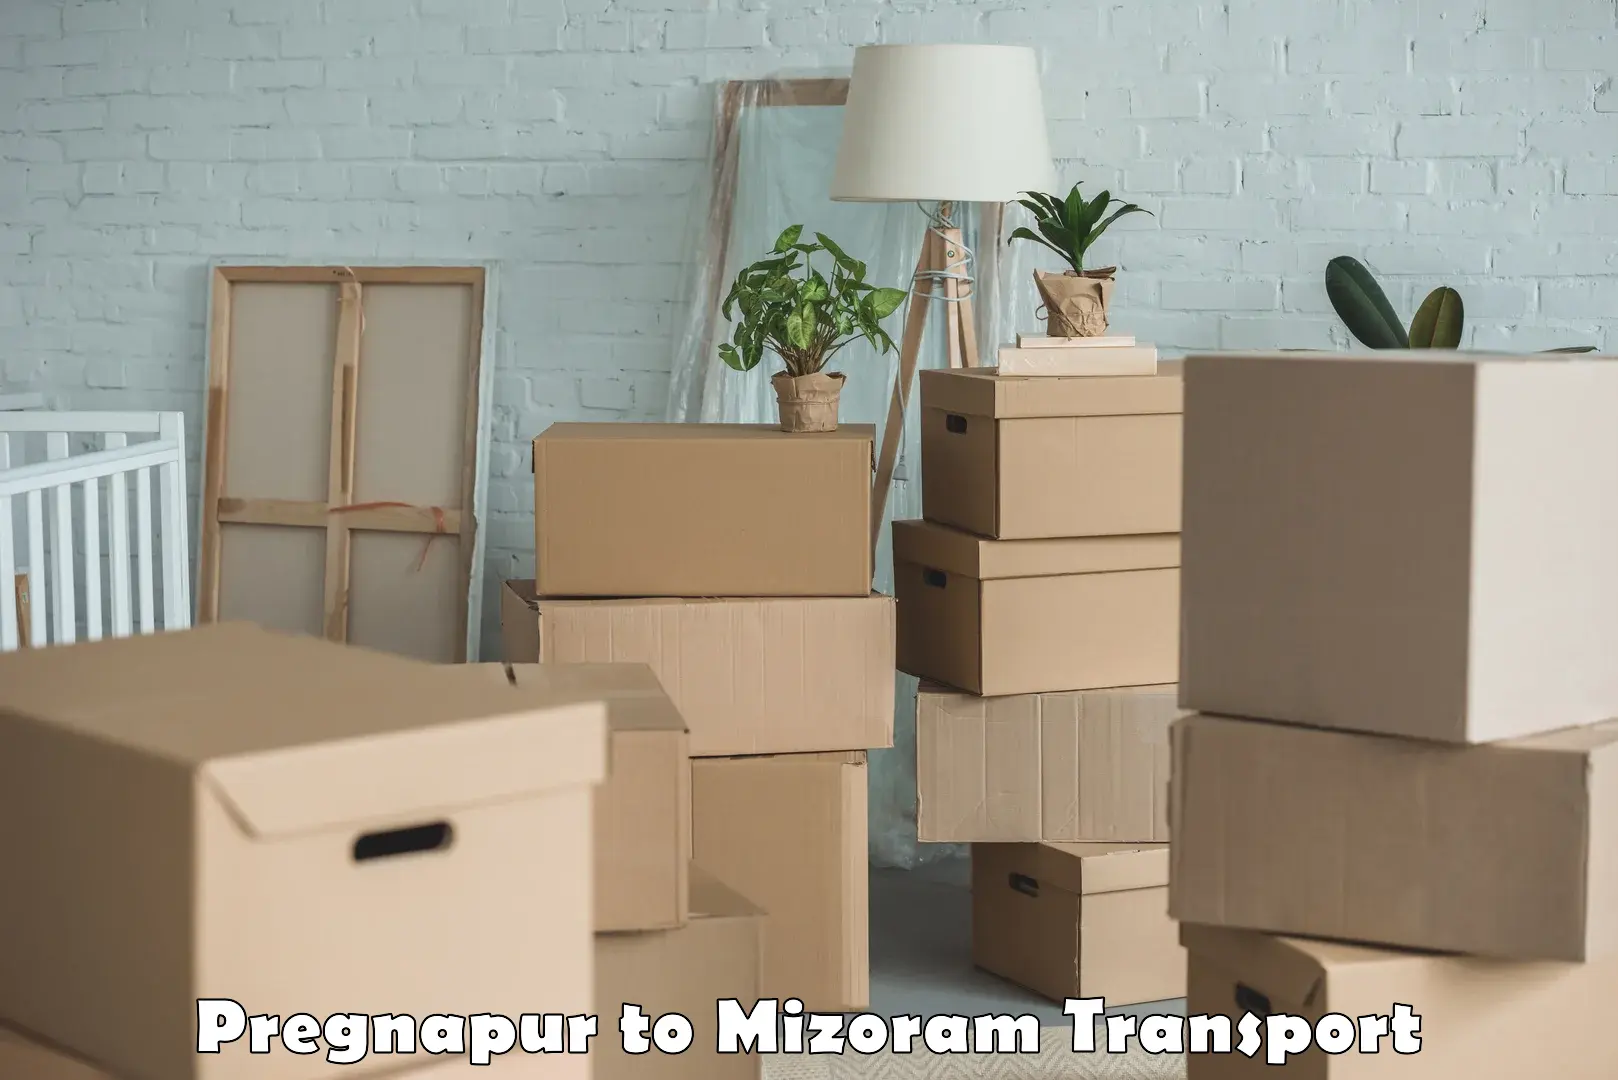 Goods delivery service Pregnapur to Mizoram